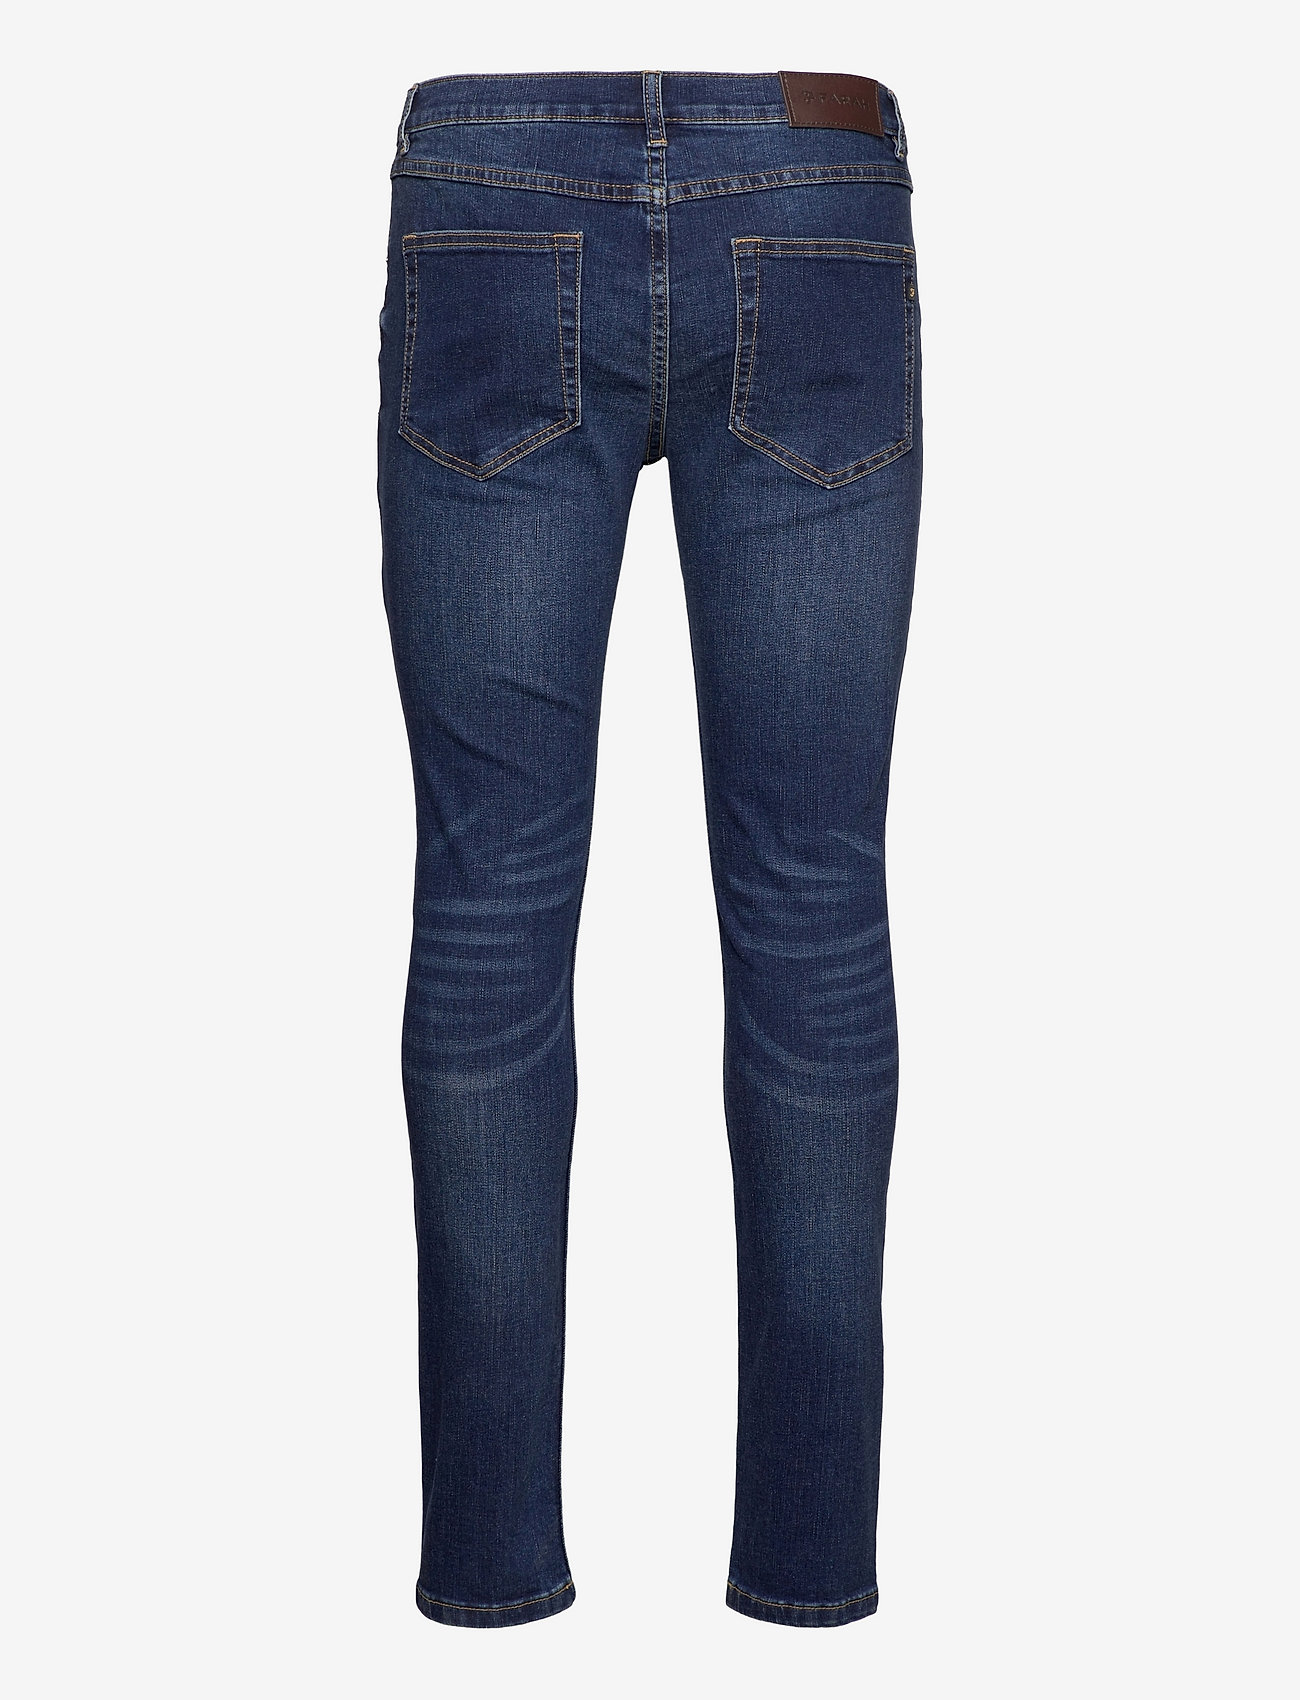 Farah - DRAKE STRETCH DENIM - skinny jeans - mid denim - 1